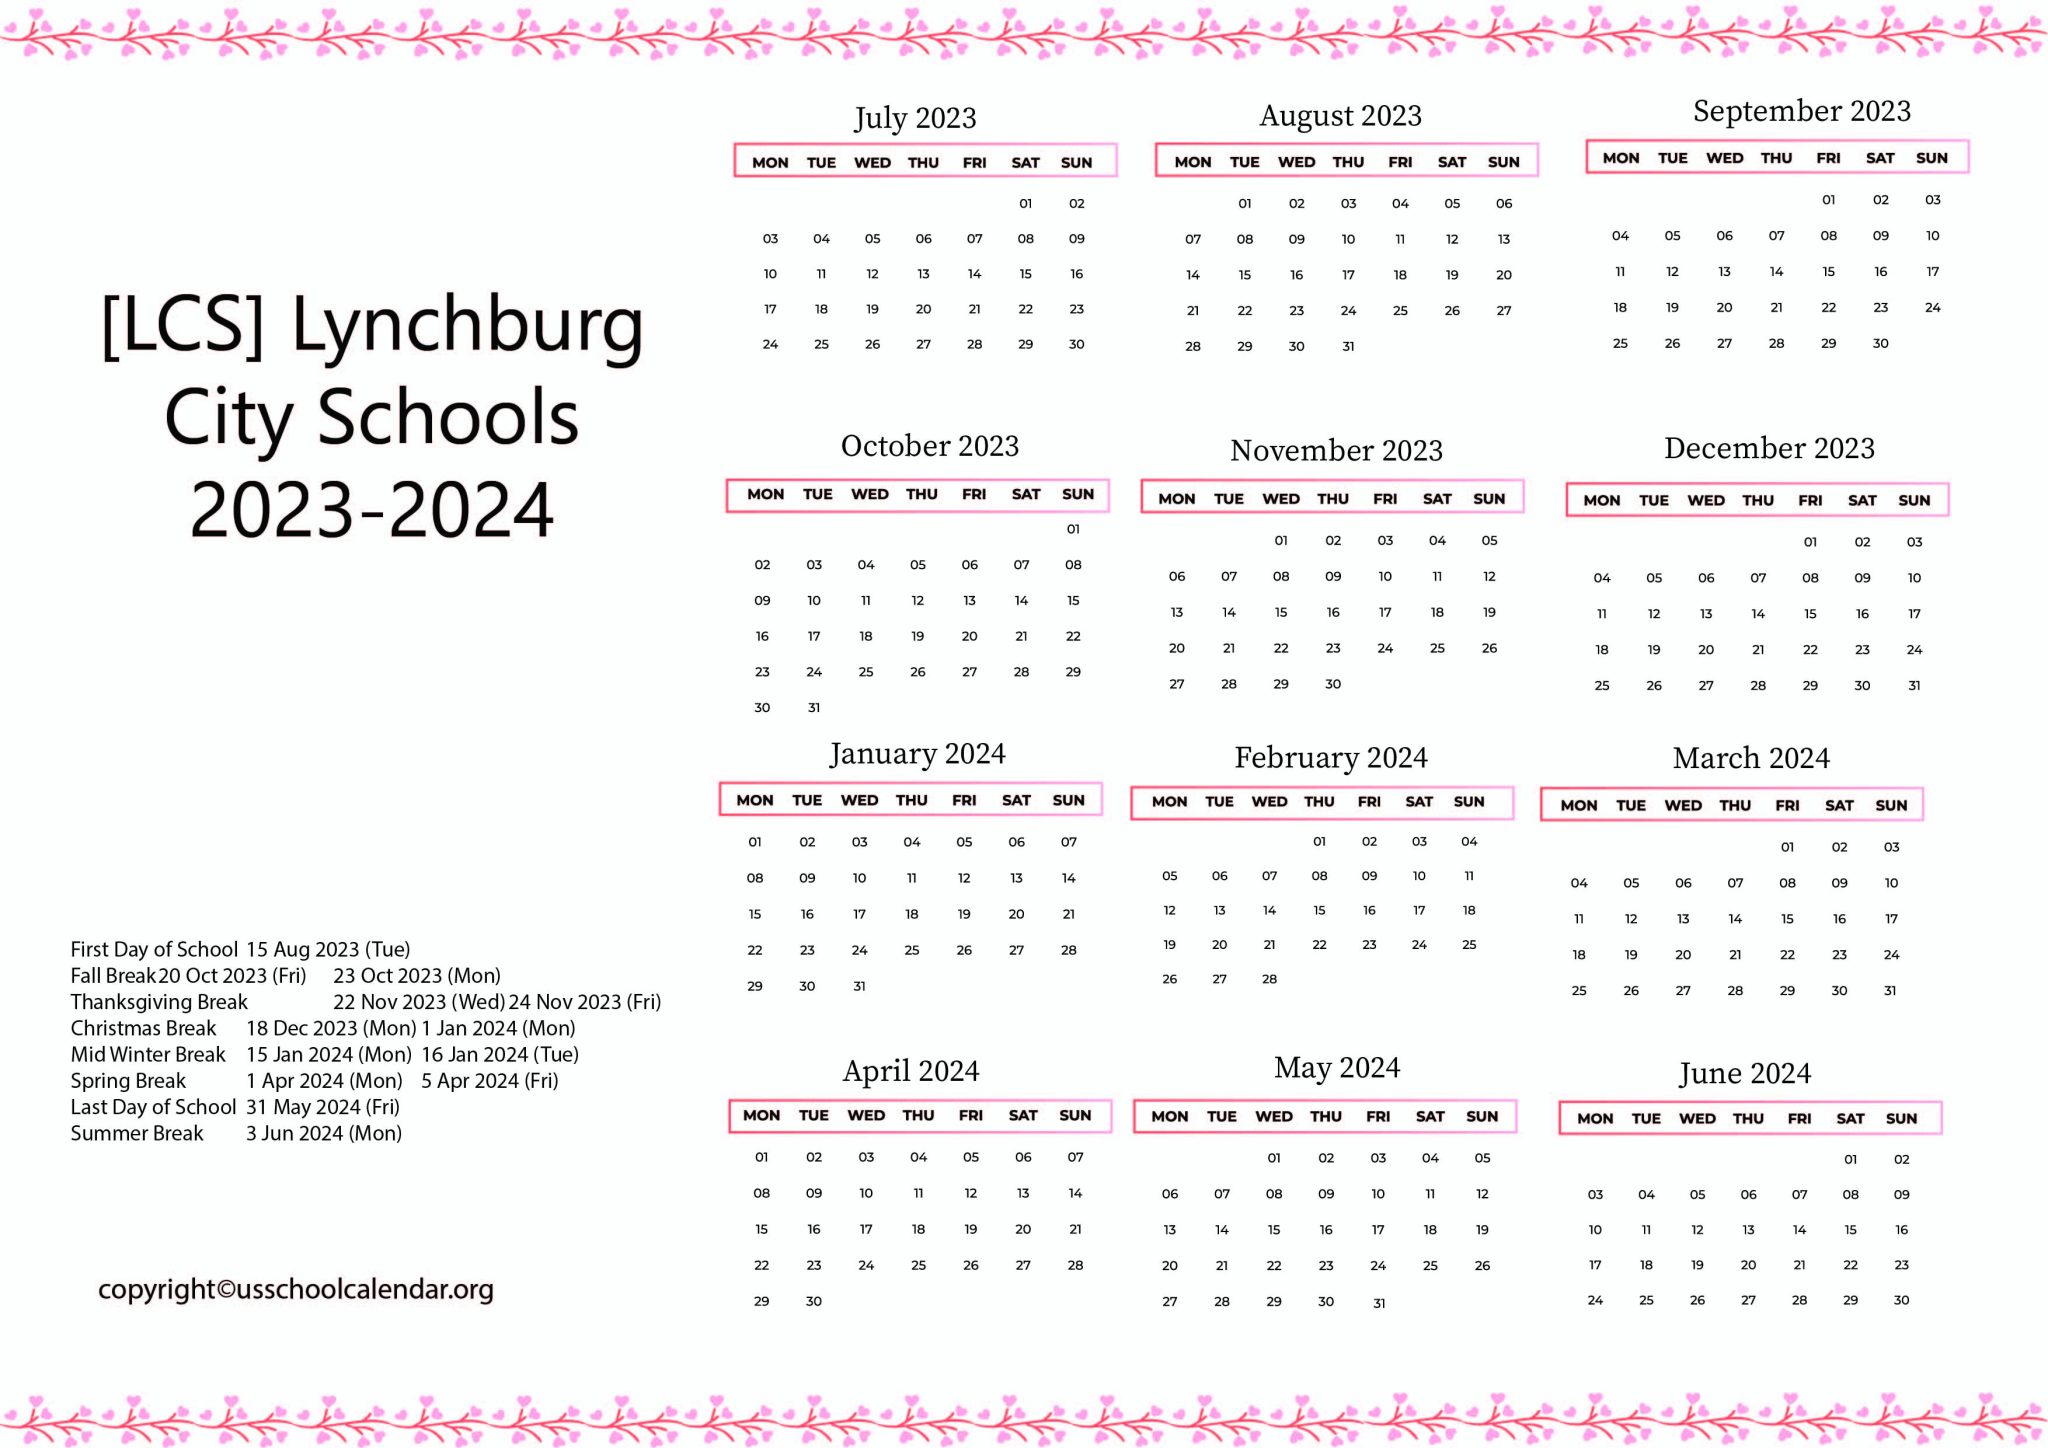 [LCS] Lynchburg City Schools Calendar with Holidays 20232024